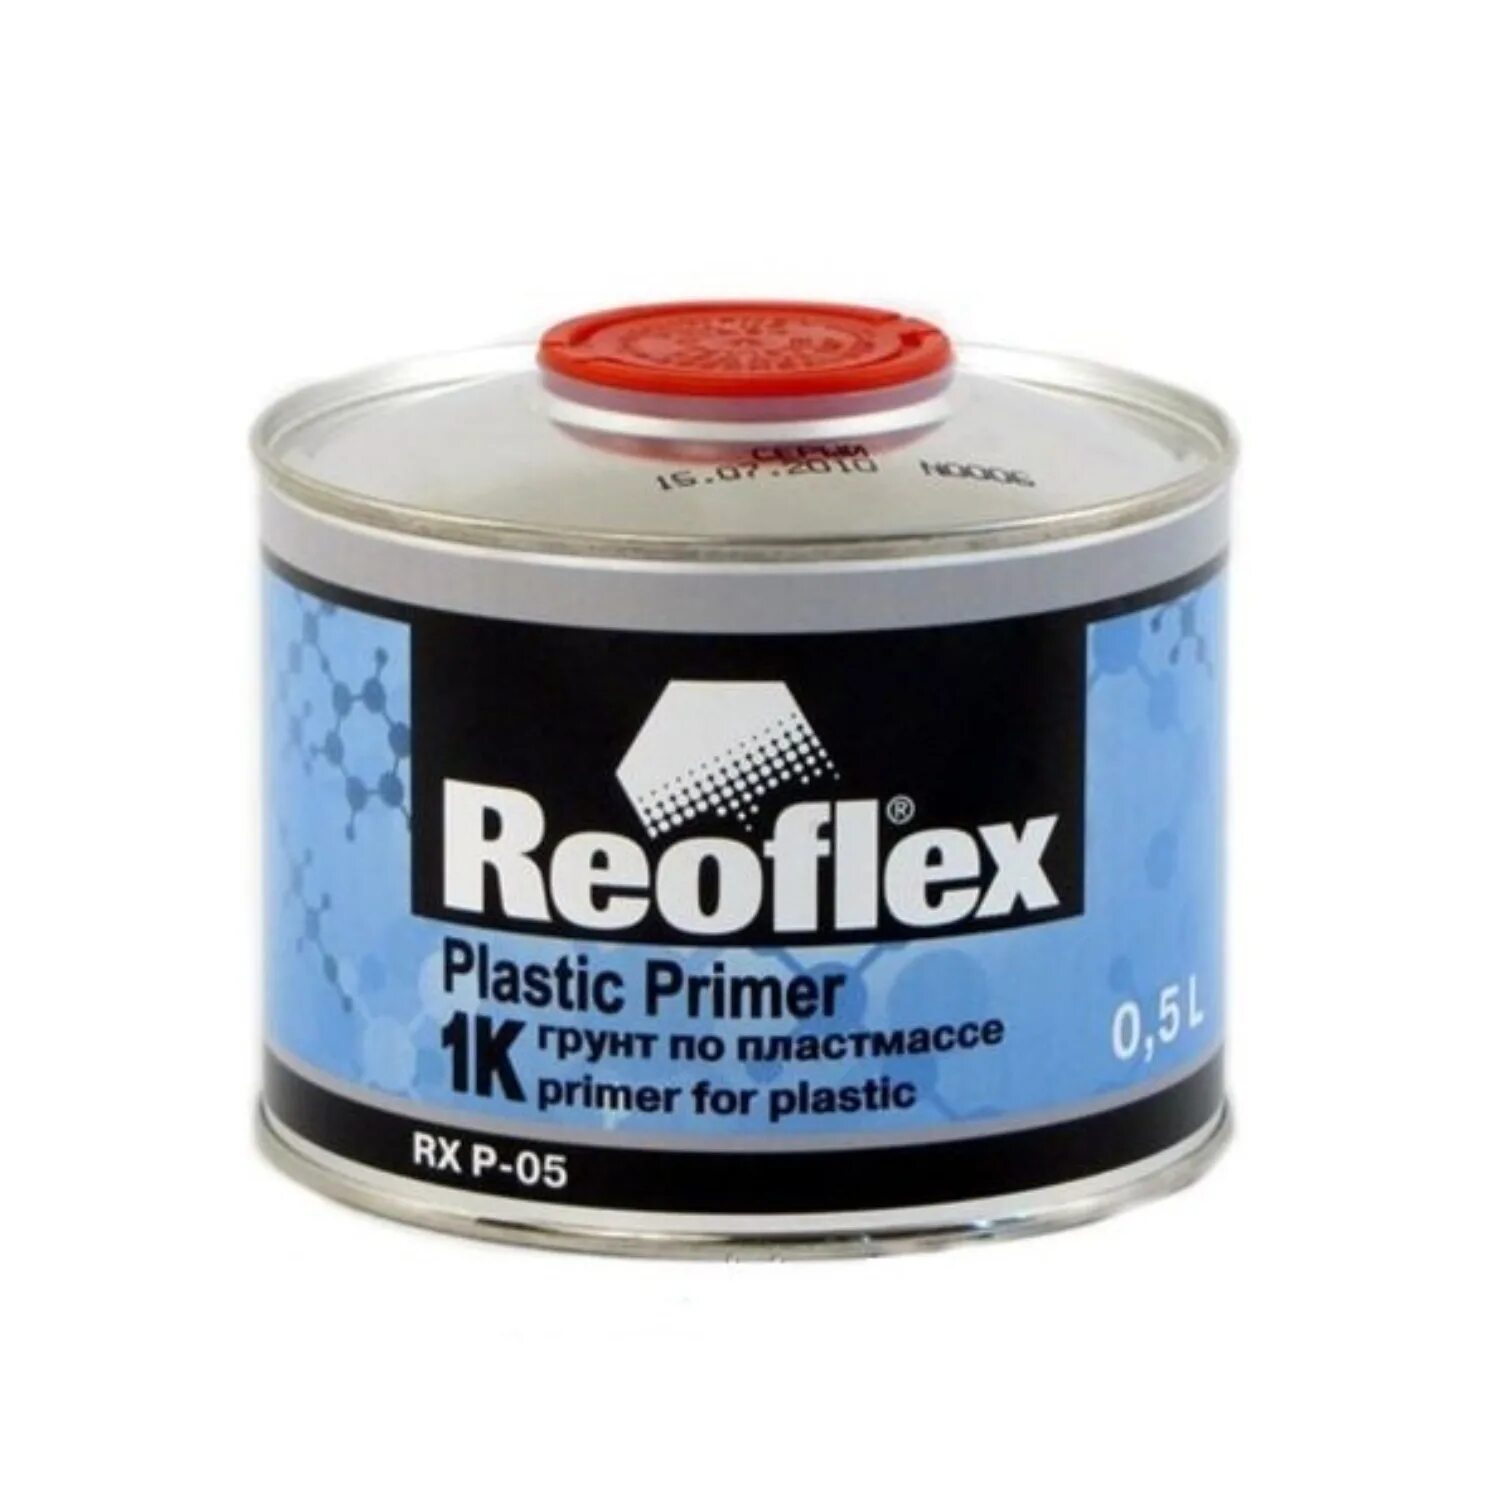 Reoflex грунт по пластмассе 1к 0.5л (серый). Грунт по пластмассе Reoflex 1k 0,5 л пигментированный серый. Грунт по пластмассе серый 520мл Plastic primer Reoflex. 1к грунт реофлекс белый.